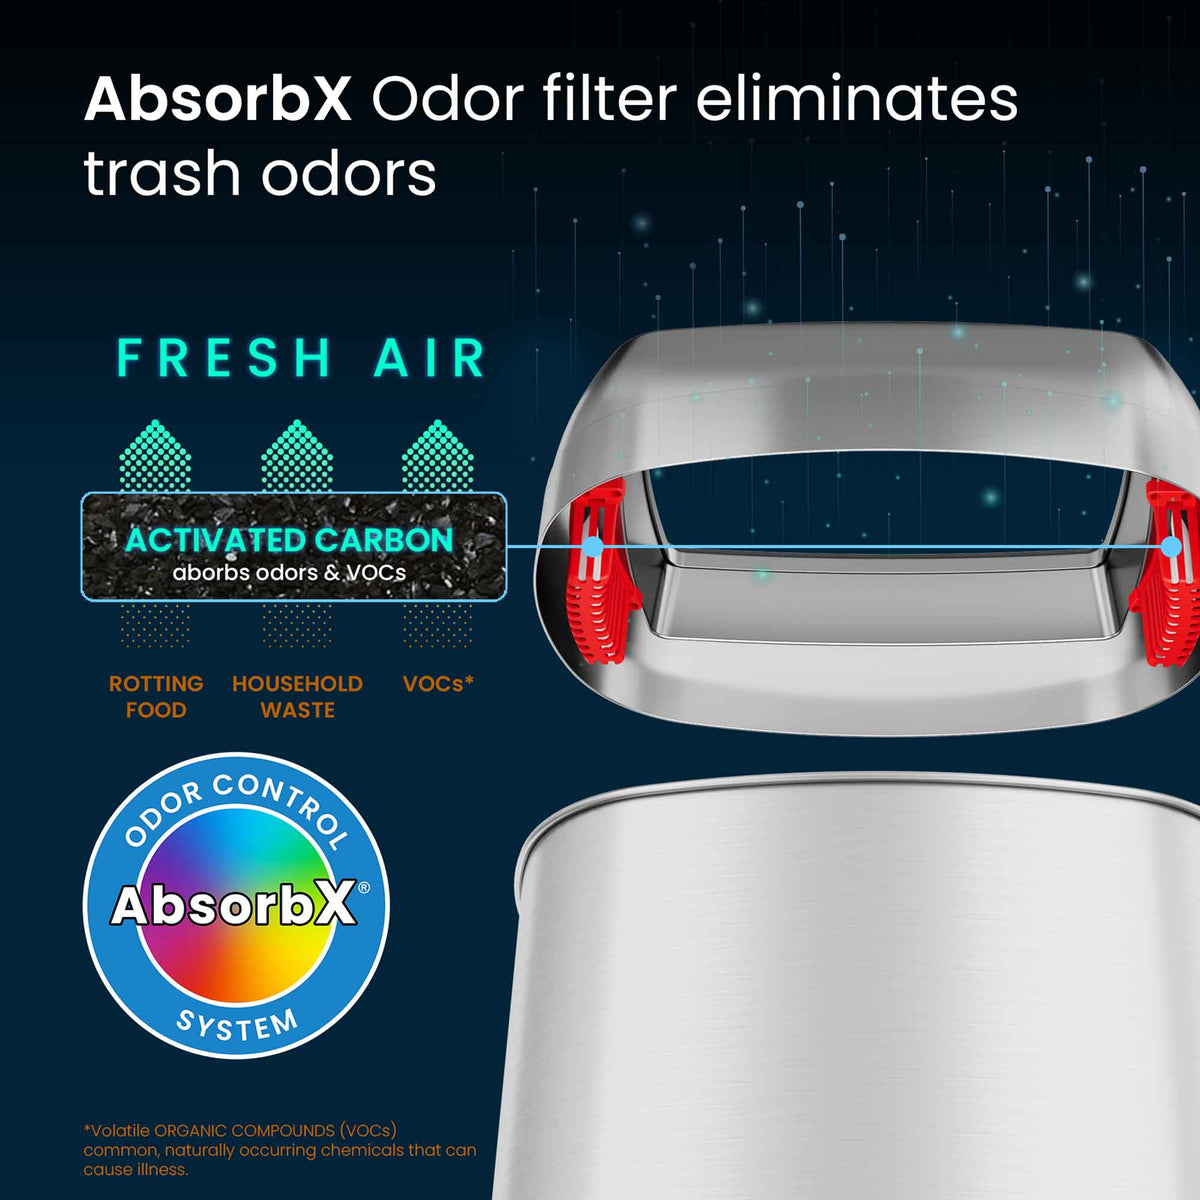 13 Gallon Elliptical Open Top Trash Can AbsorbX Odor Filter eliminate trash odors